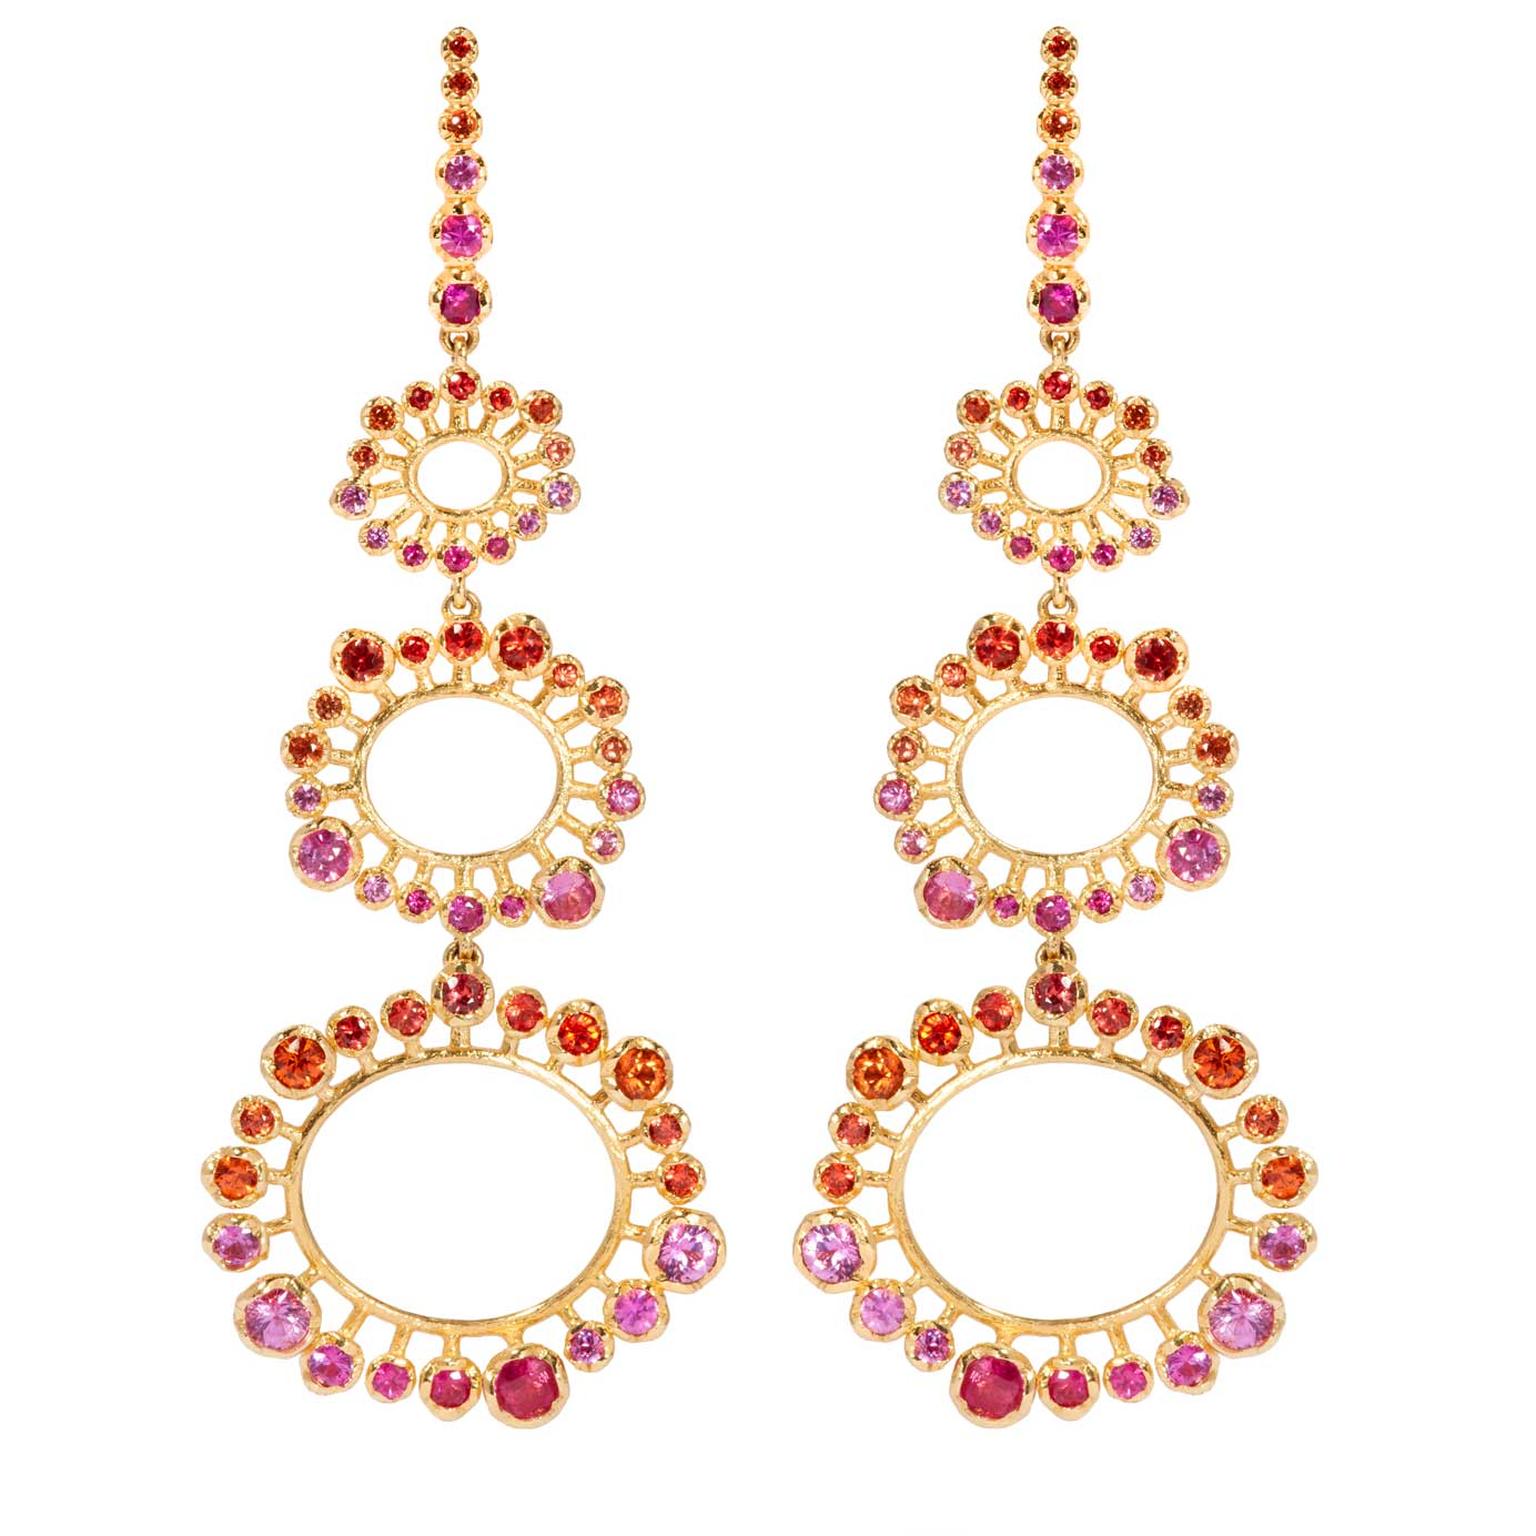 Annoushka Hidden Reef gold sapphire earrings £9900